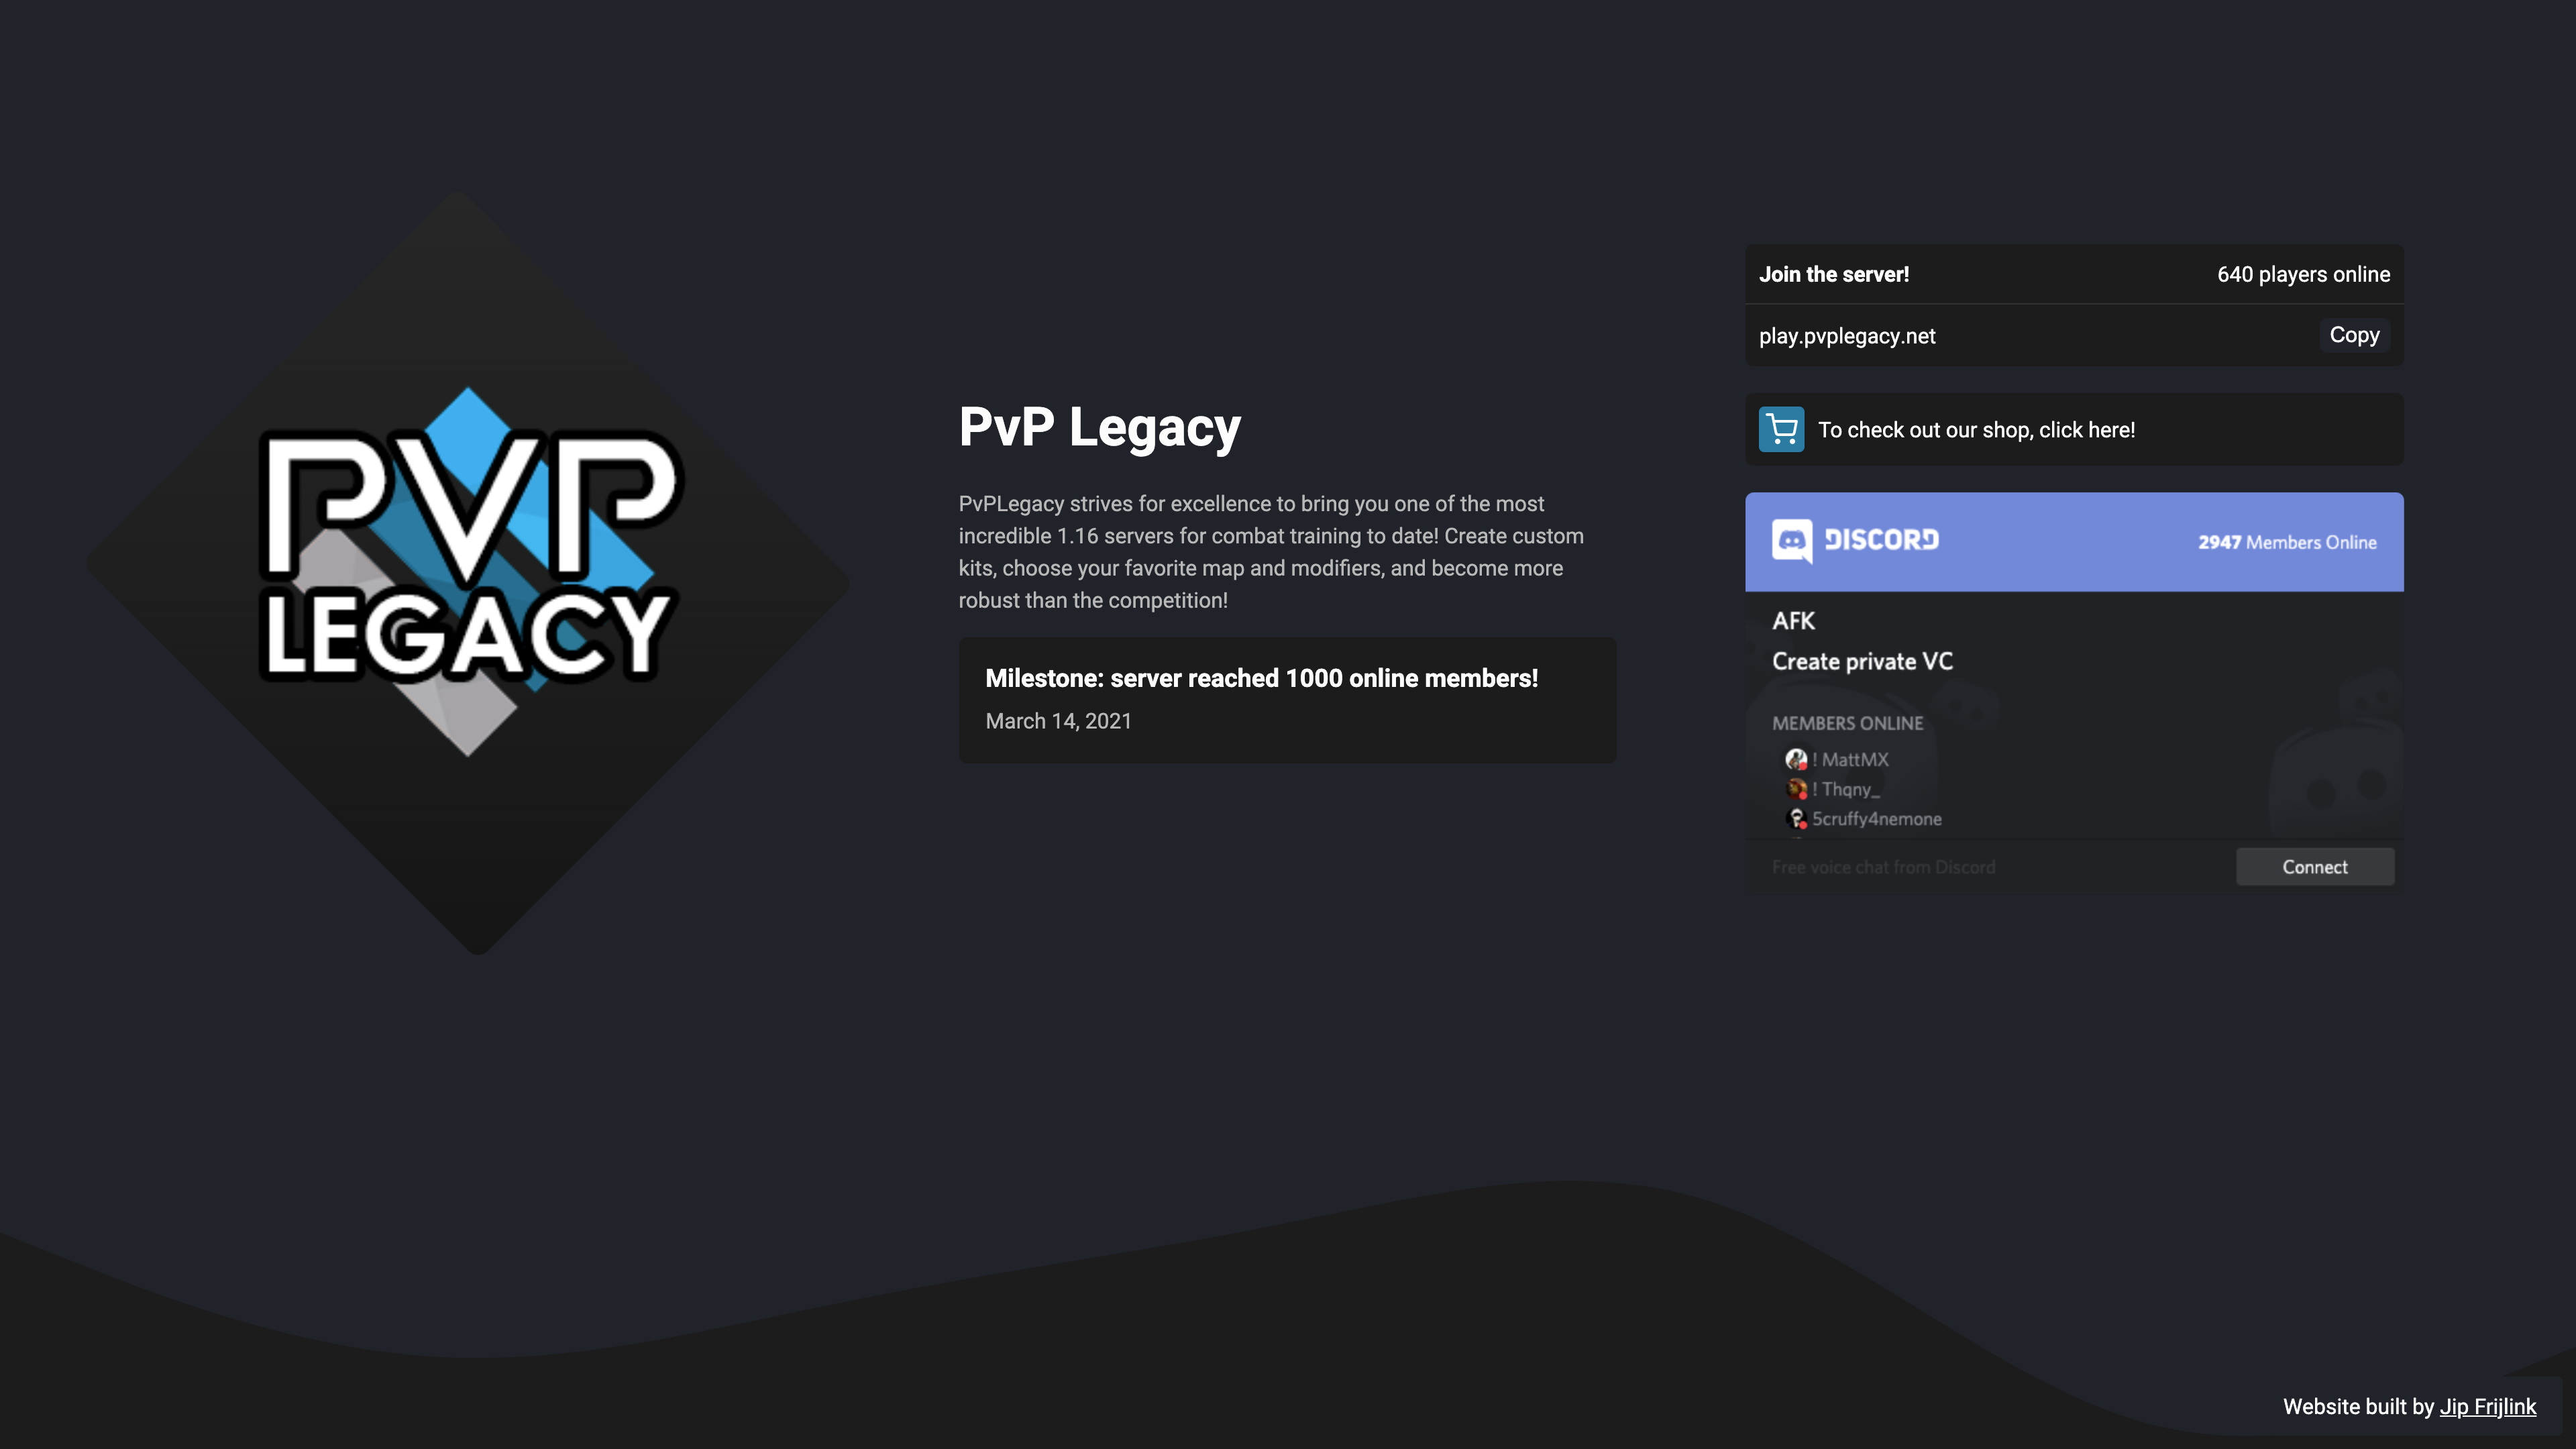 PvP Legacy website in dark mode